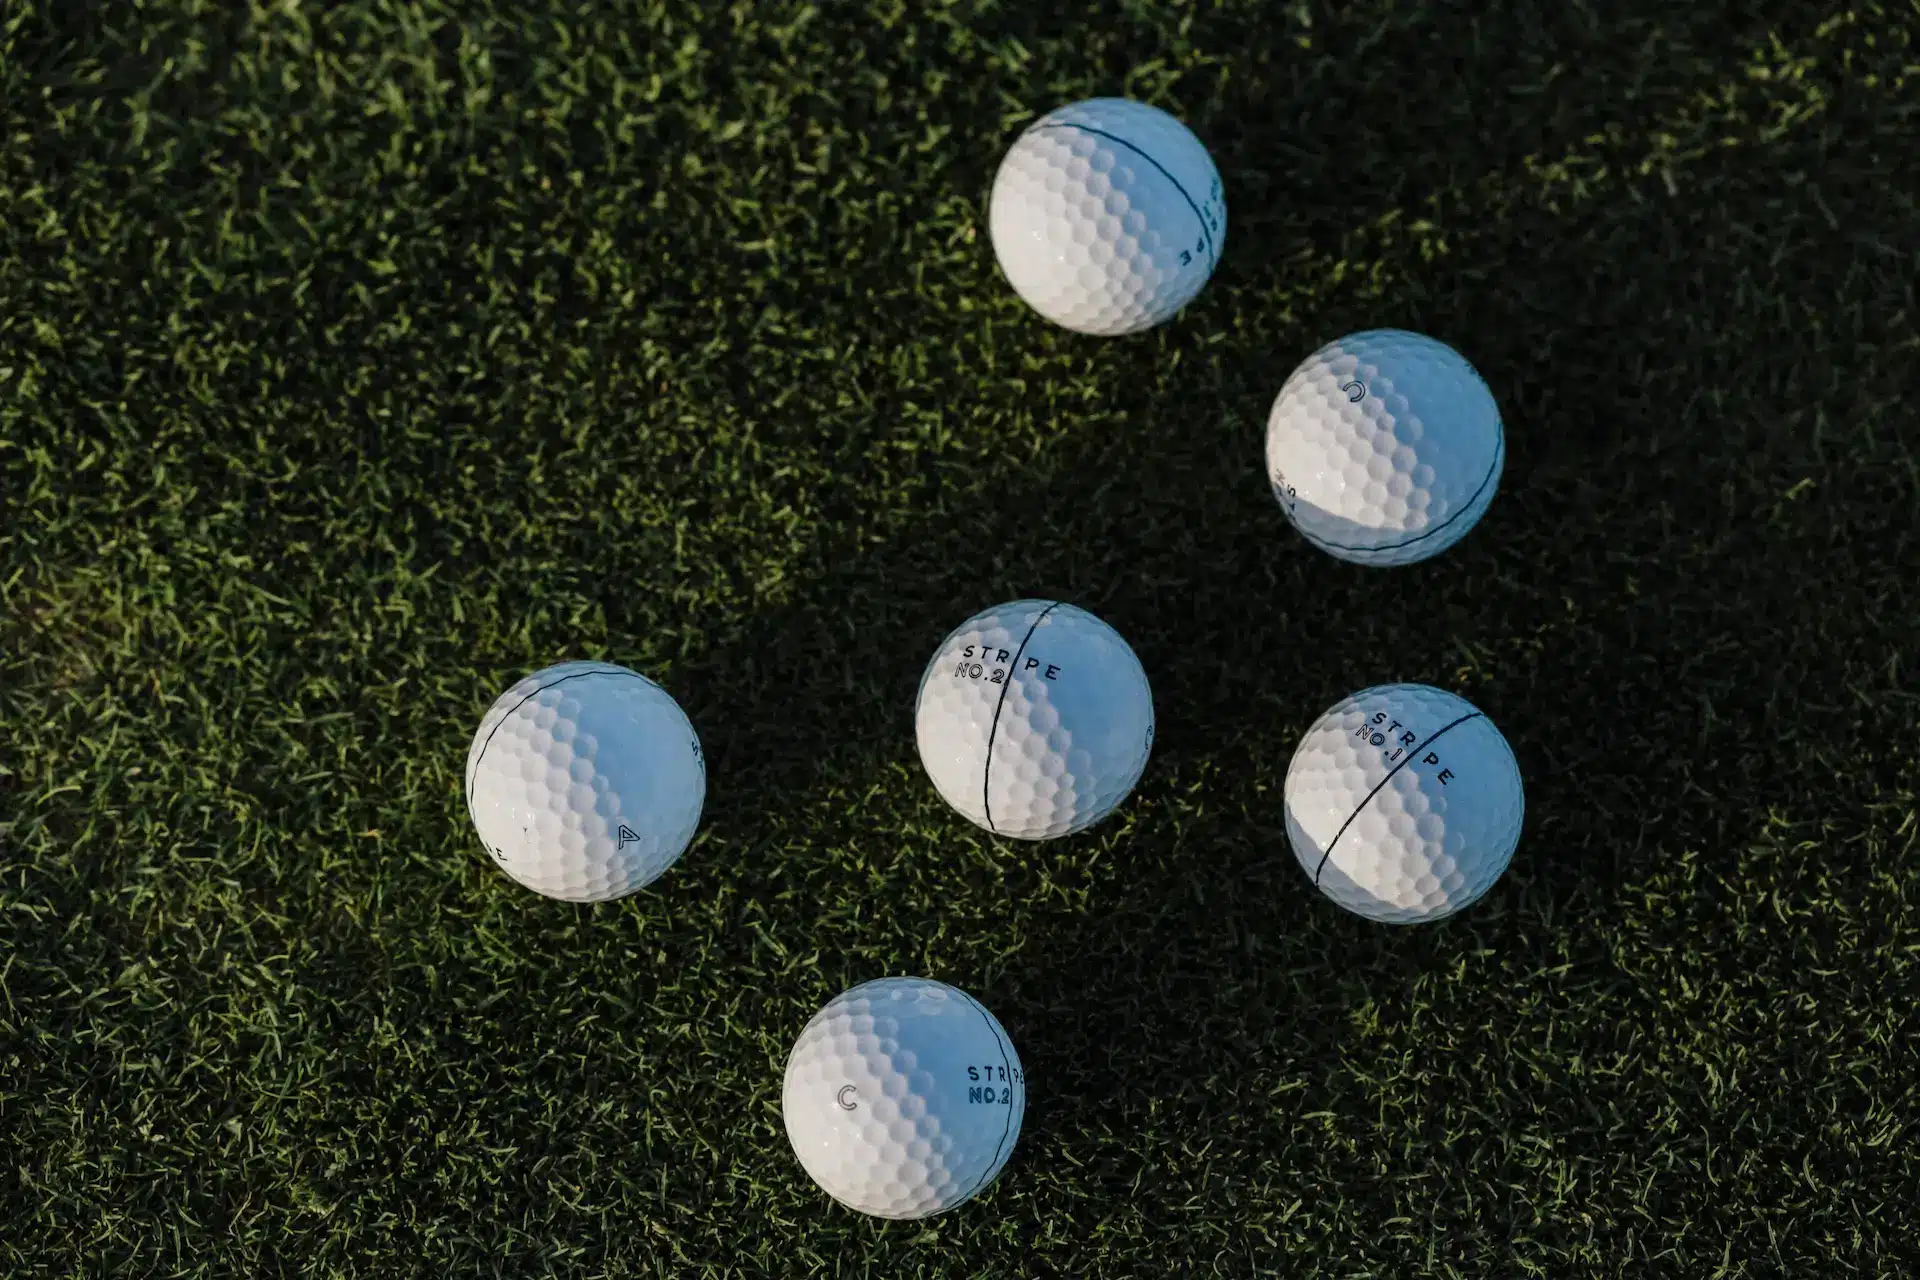 Golf ball on fairway - Stripe golf